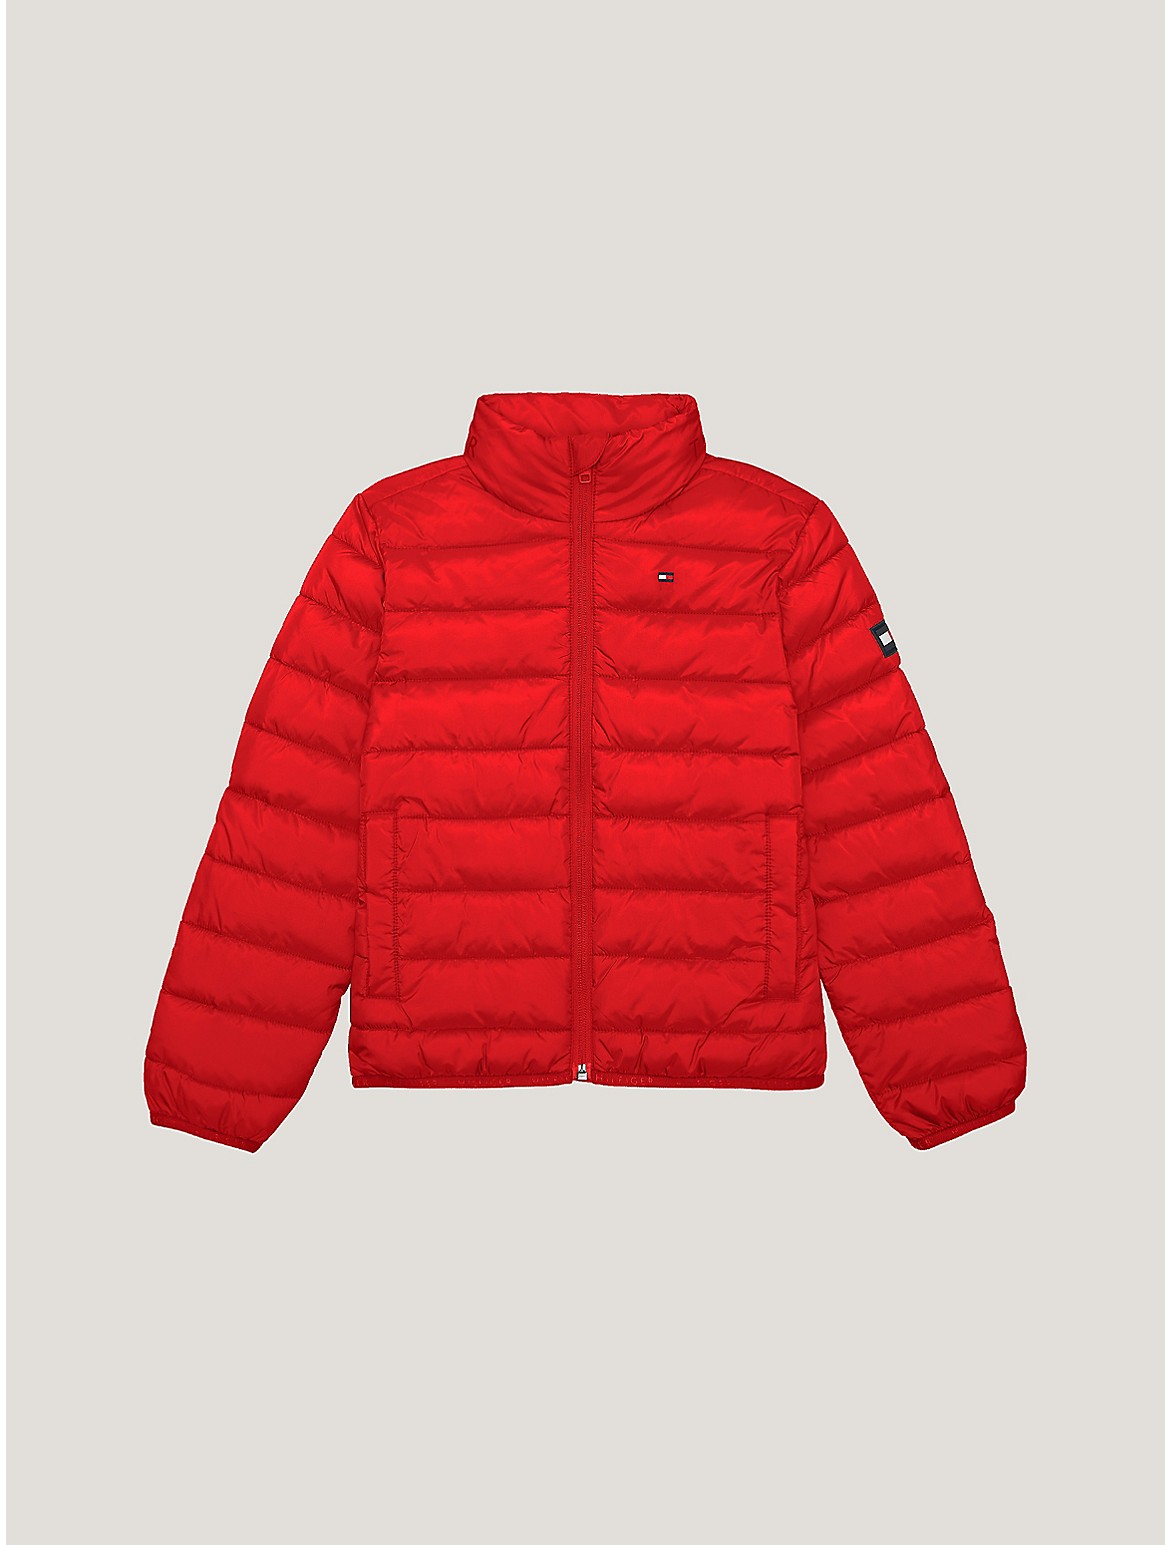 Tommy Hilfiger Boys' Kids' Insulated Jacket